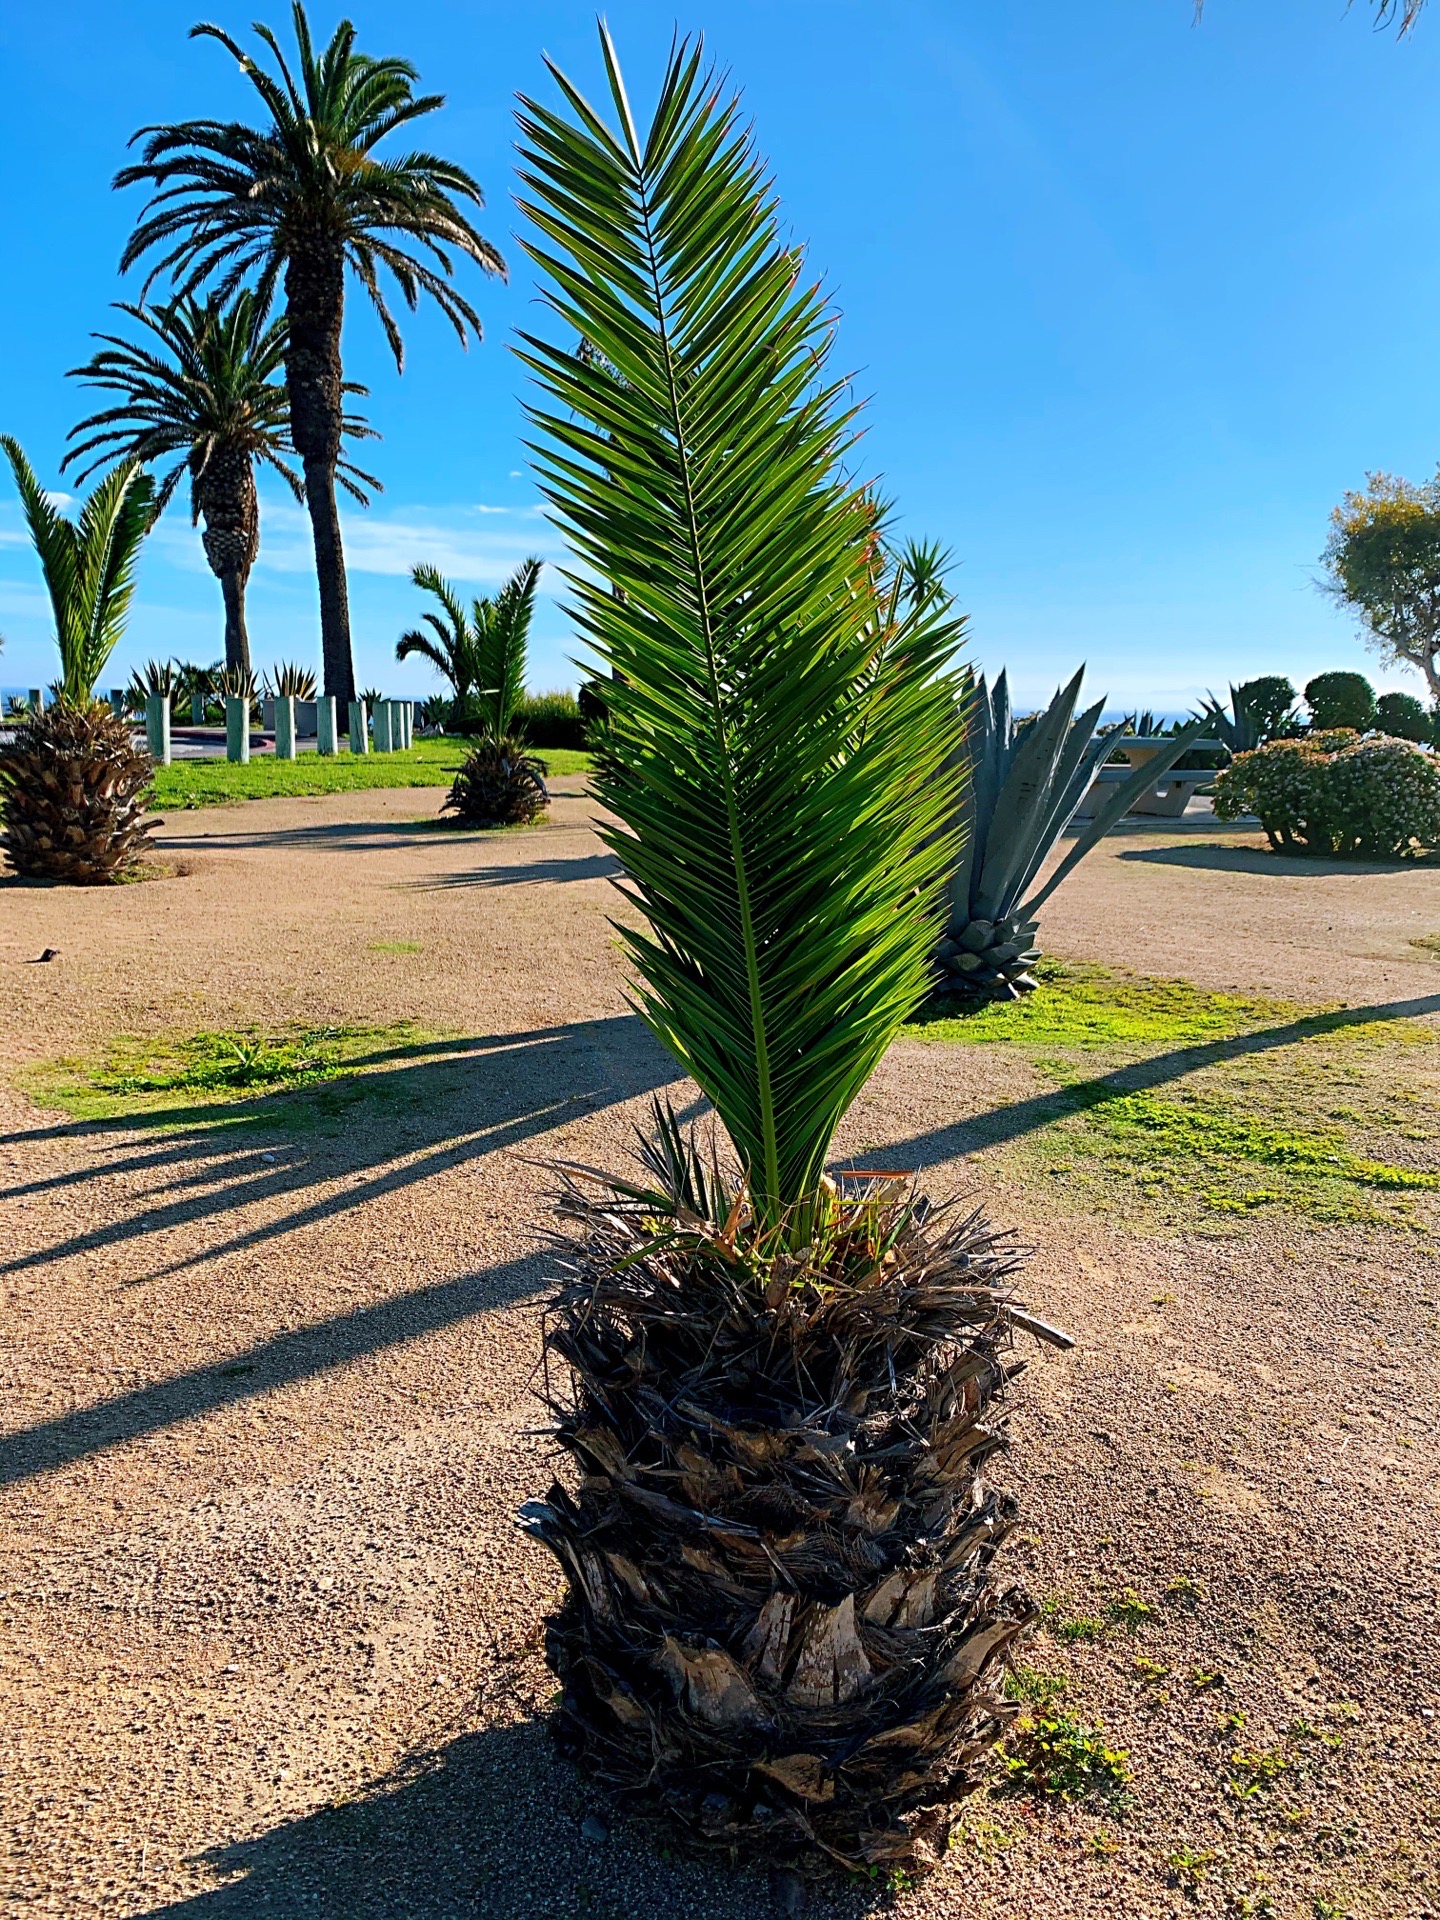 White Point Park 位于洛杉矶长滩附近，交通便利，风景不错，海水特别清澈，有大量的寄居